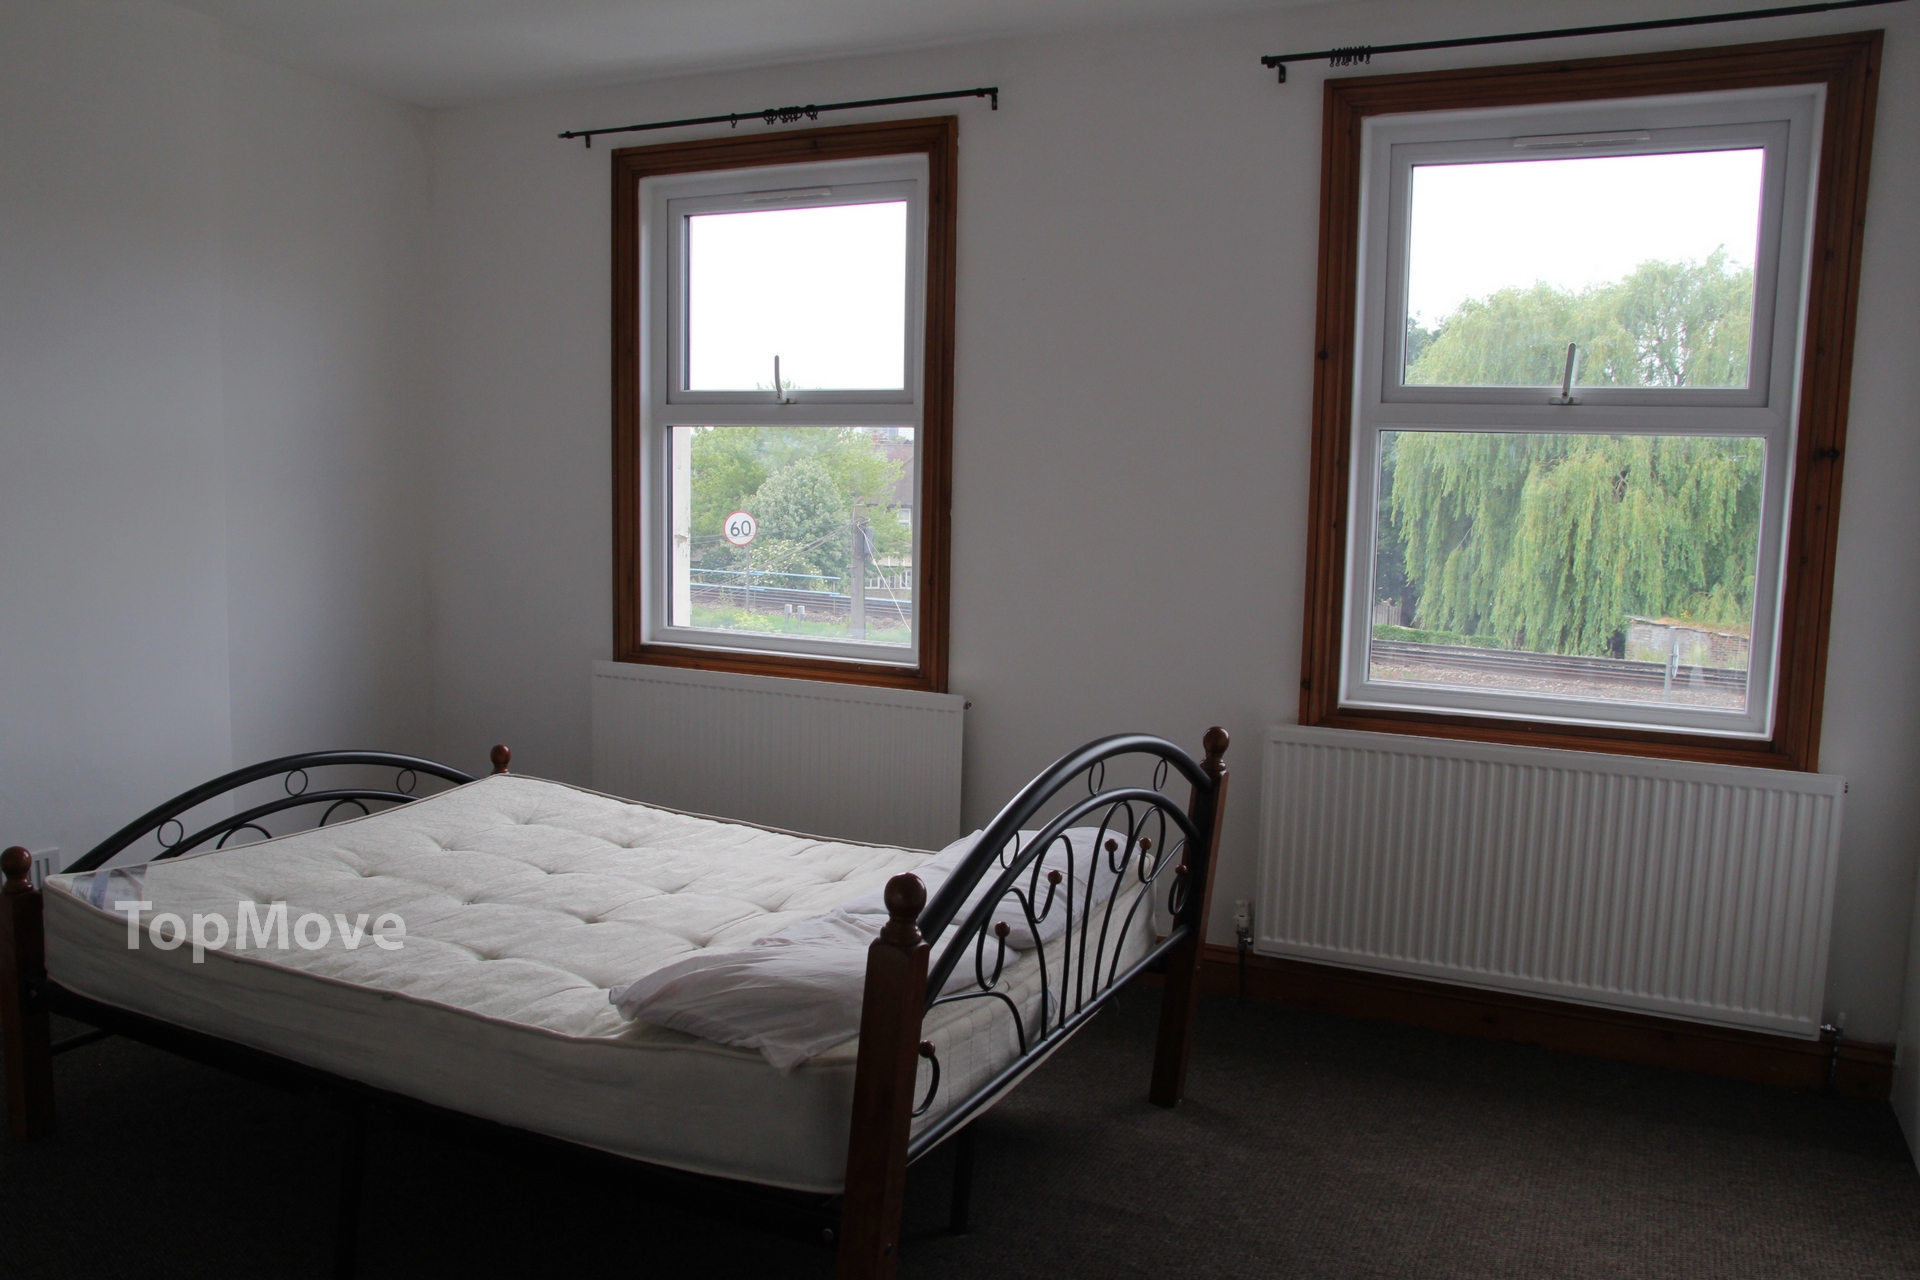 3 bedrooms flat, 3 2 Newhaven Rd Selhurst Croydon Croydon